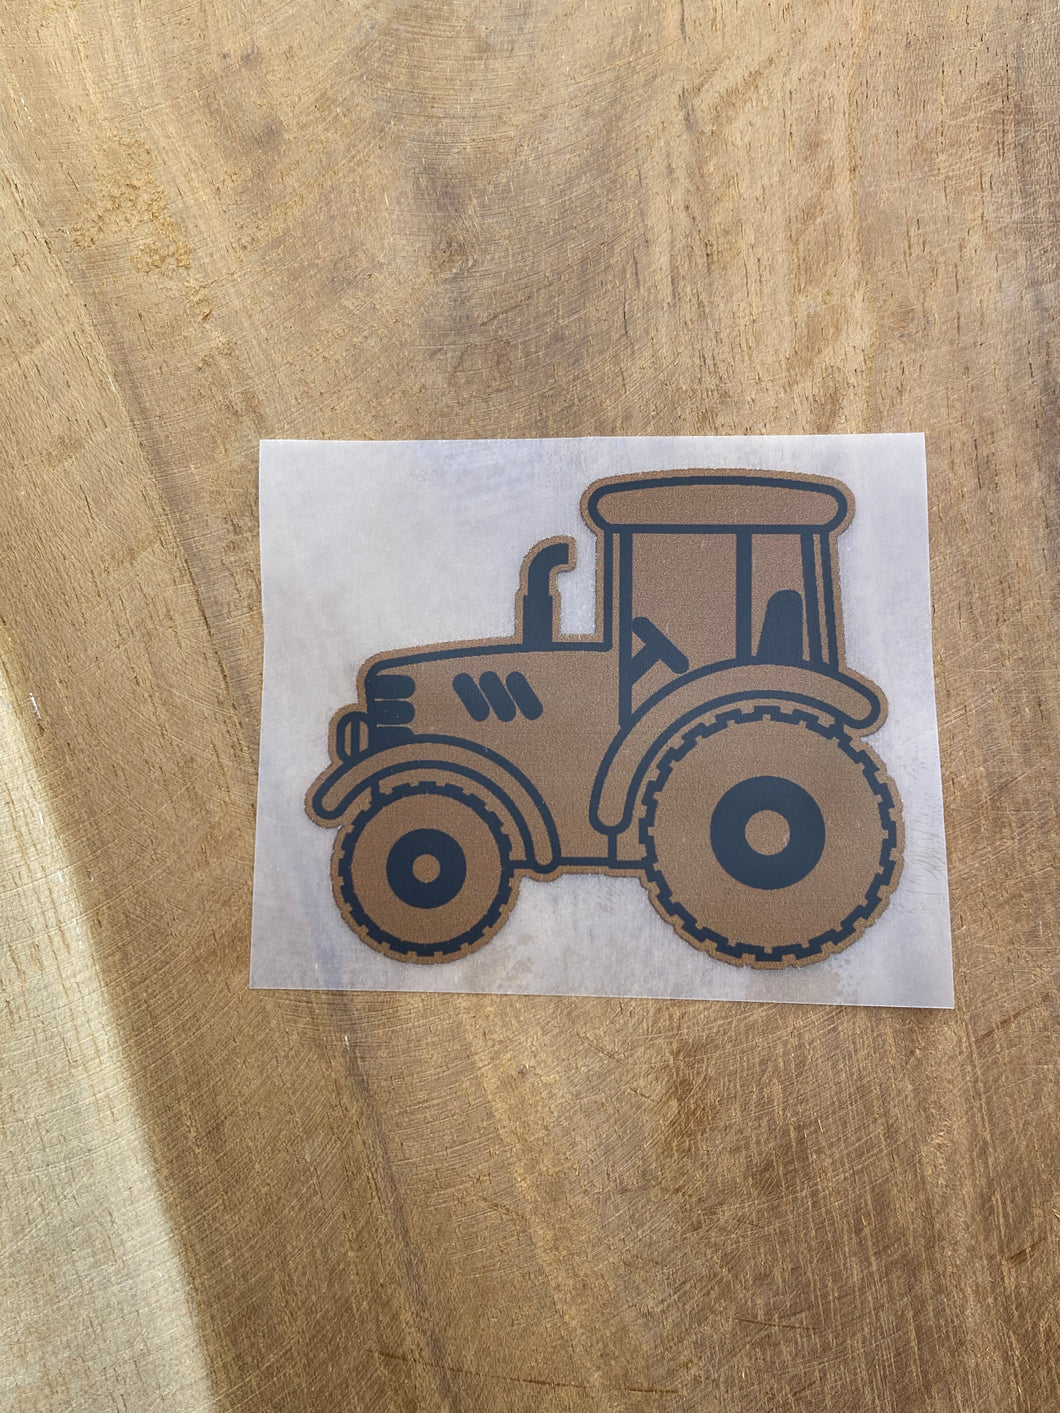 Traktor Bügel-Label Eigenproduktion